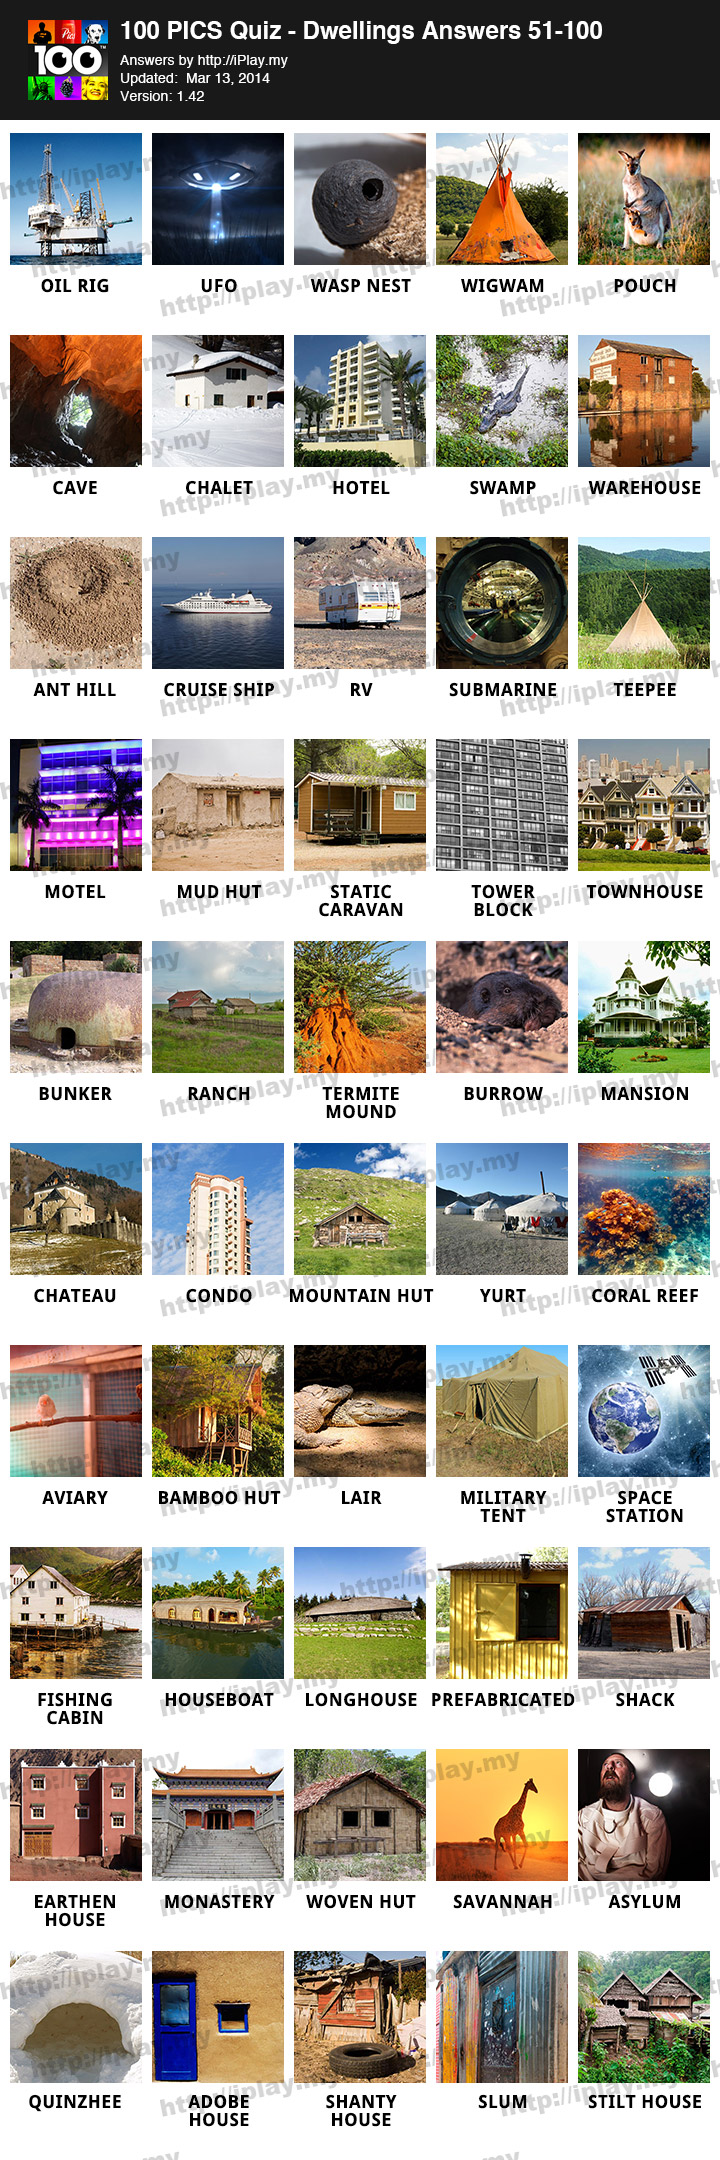 100-Pics-Quiz-Dwellings-Answers-51-100